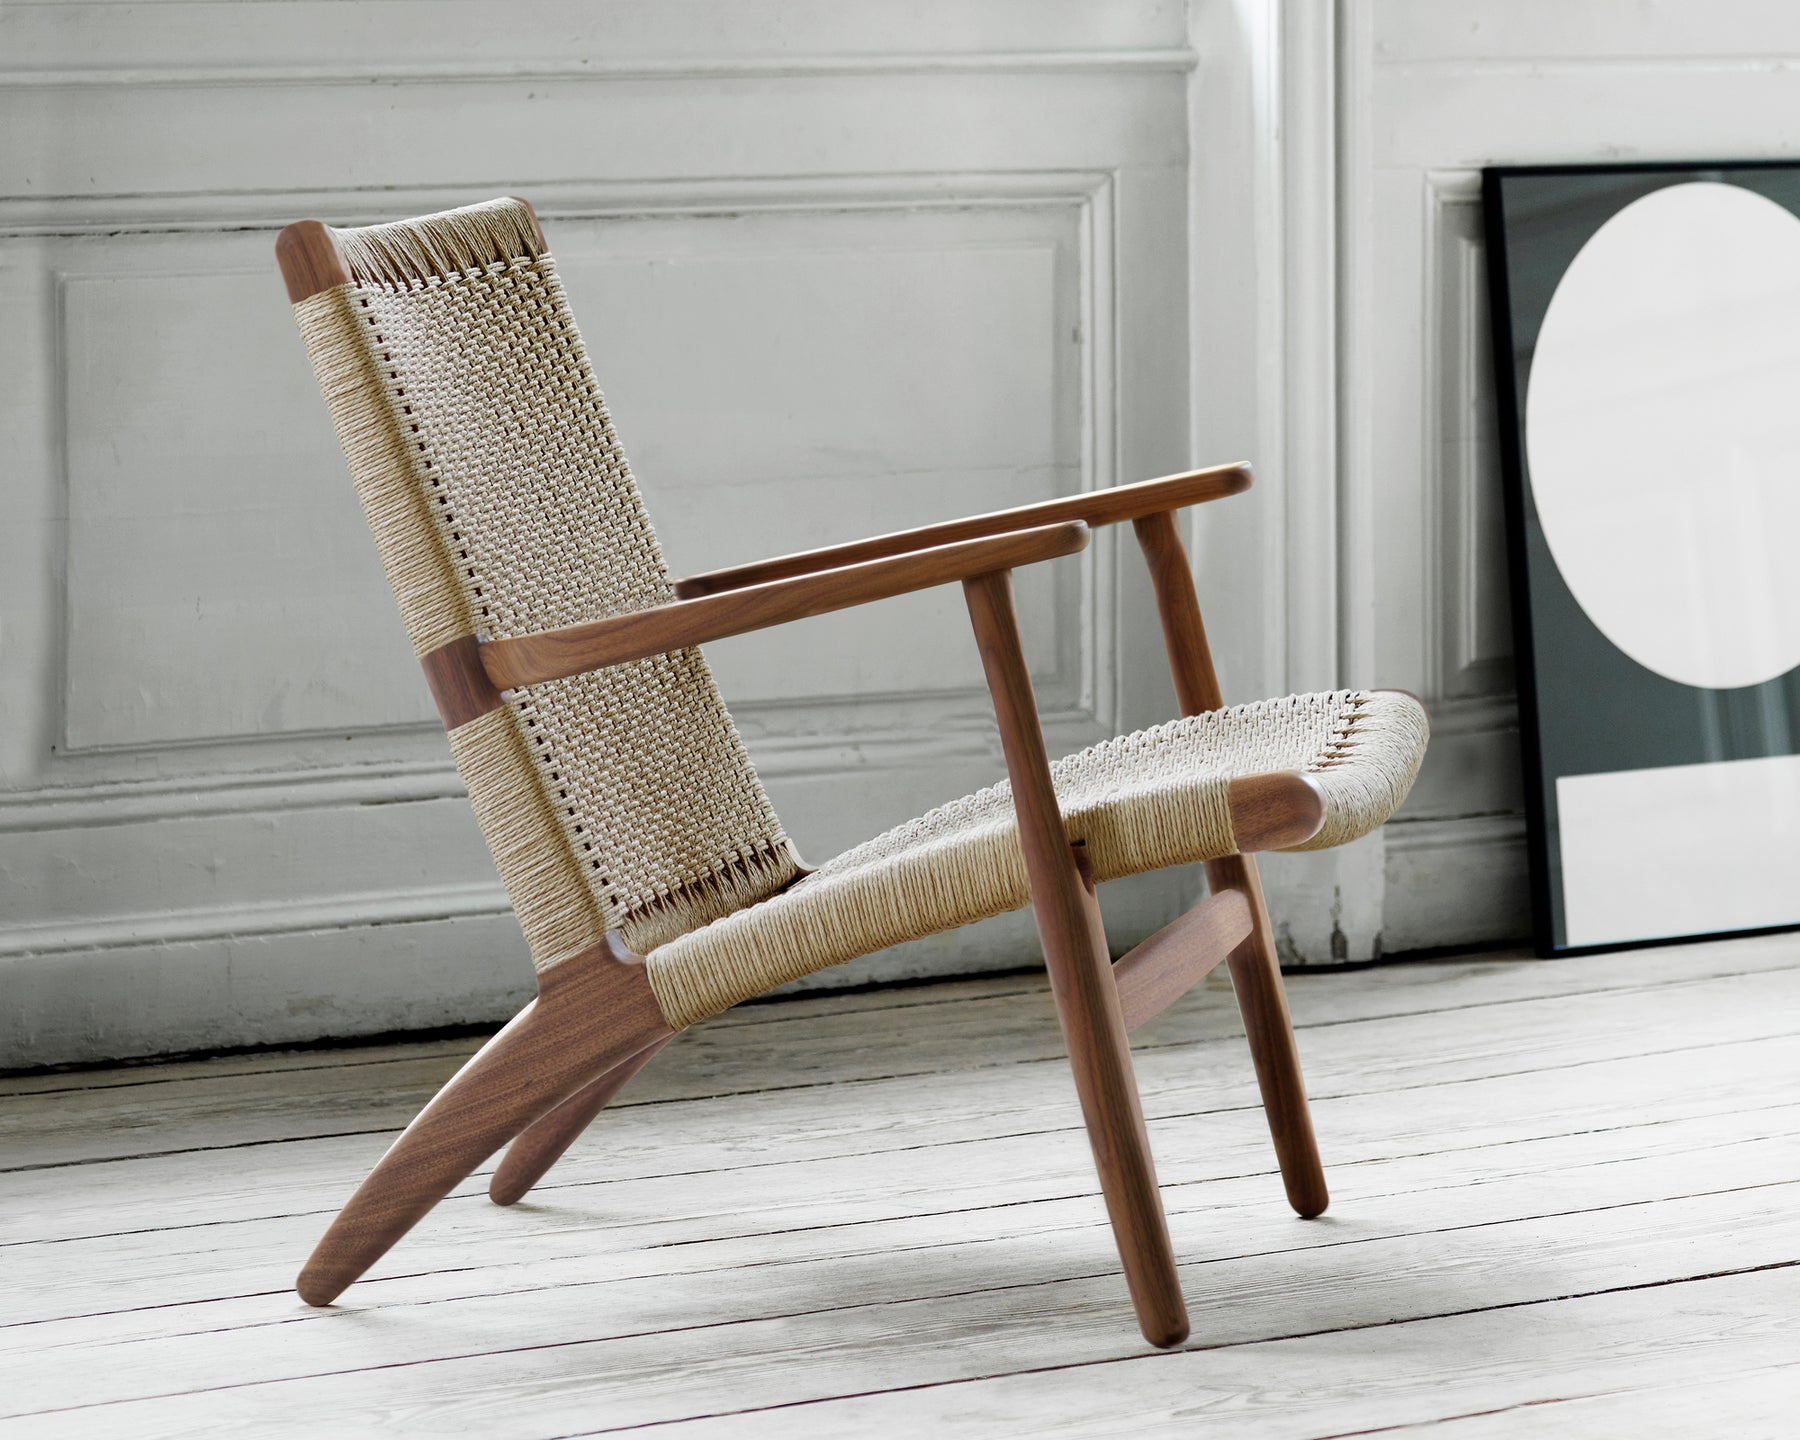 Sculptural Wood Chair | DSHOP